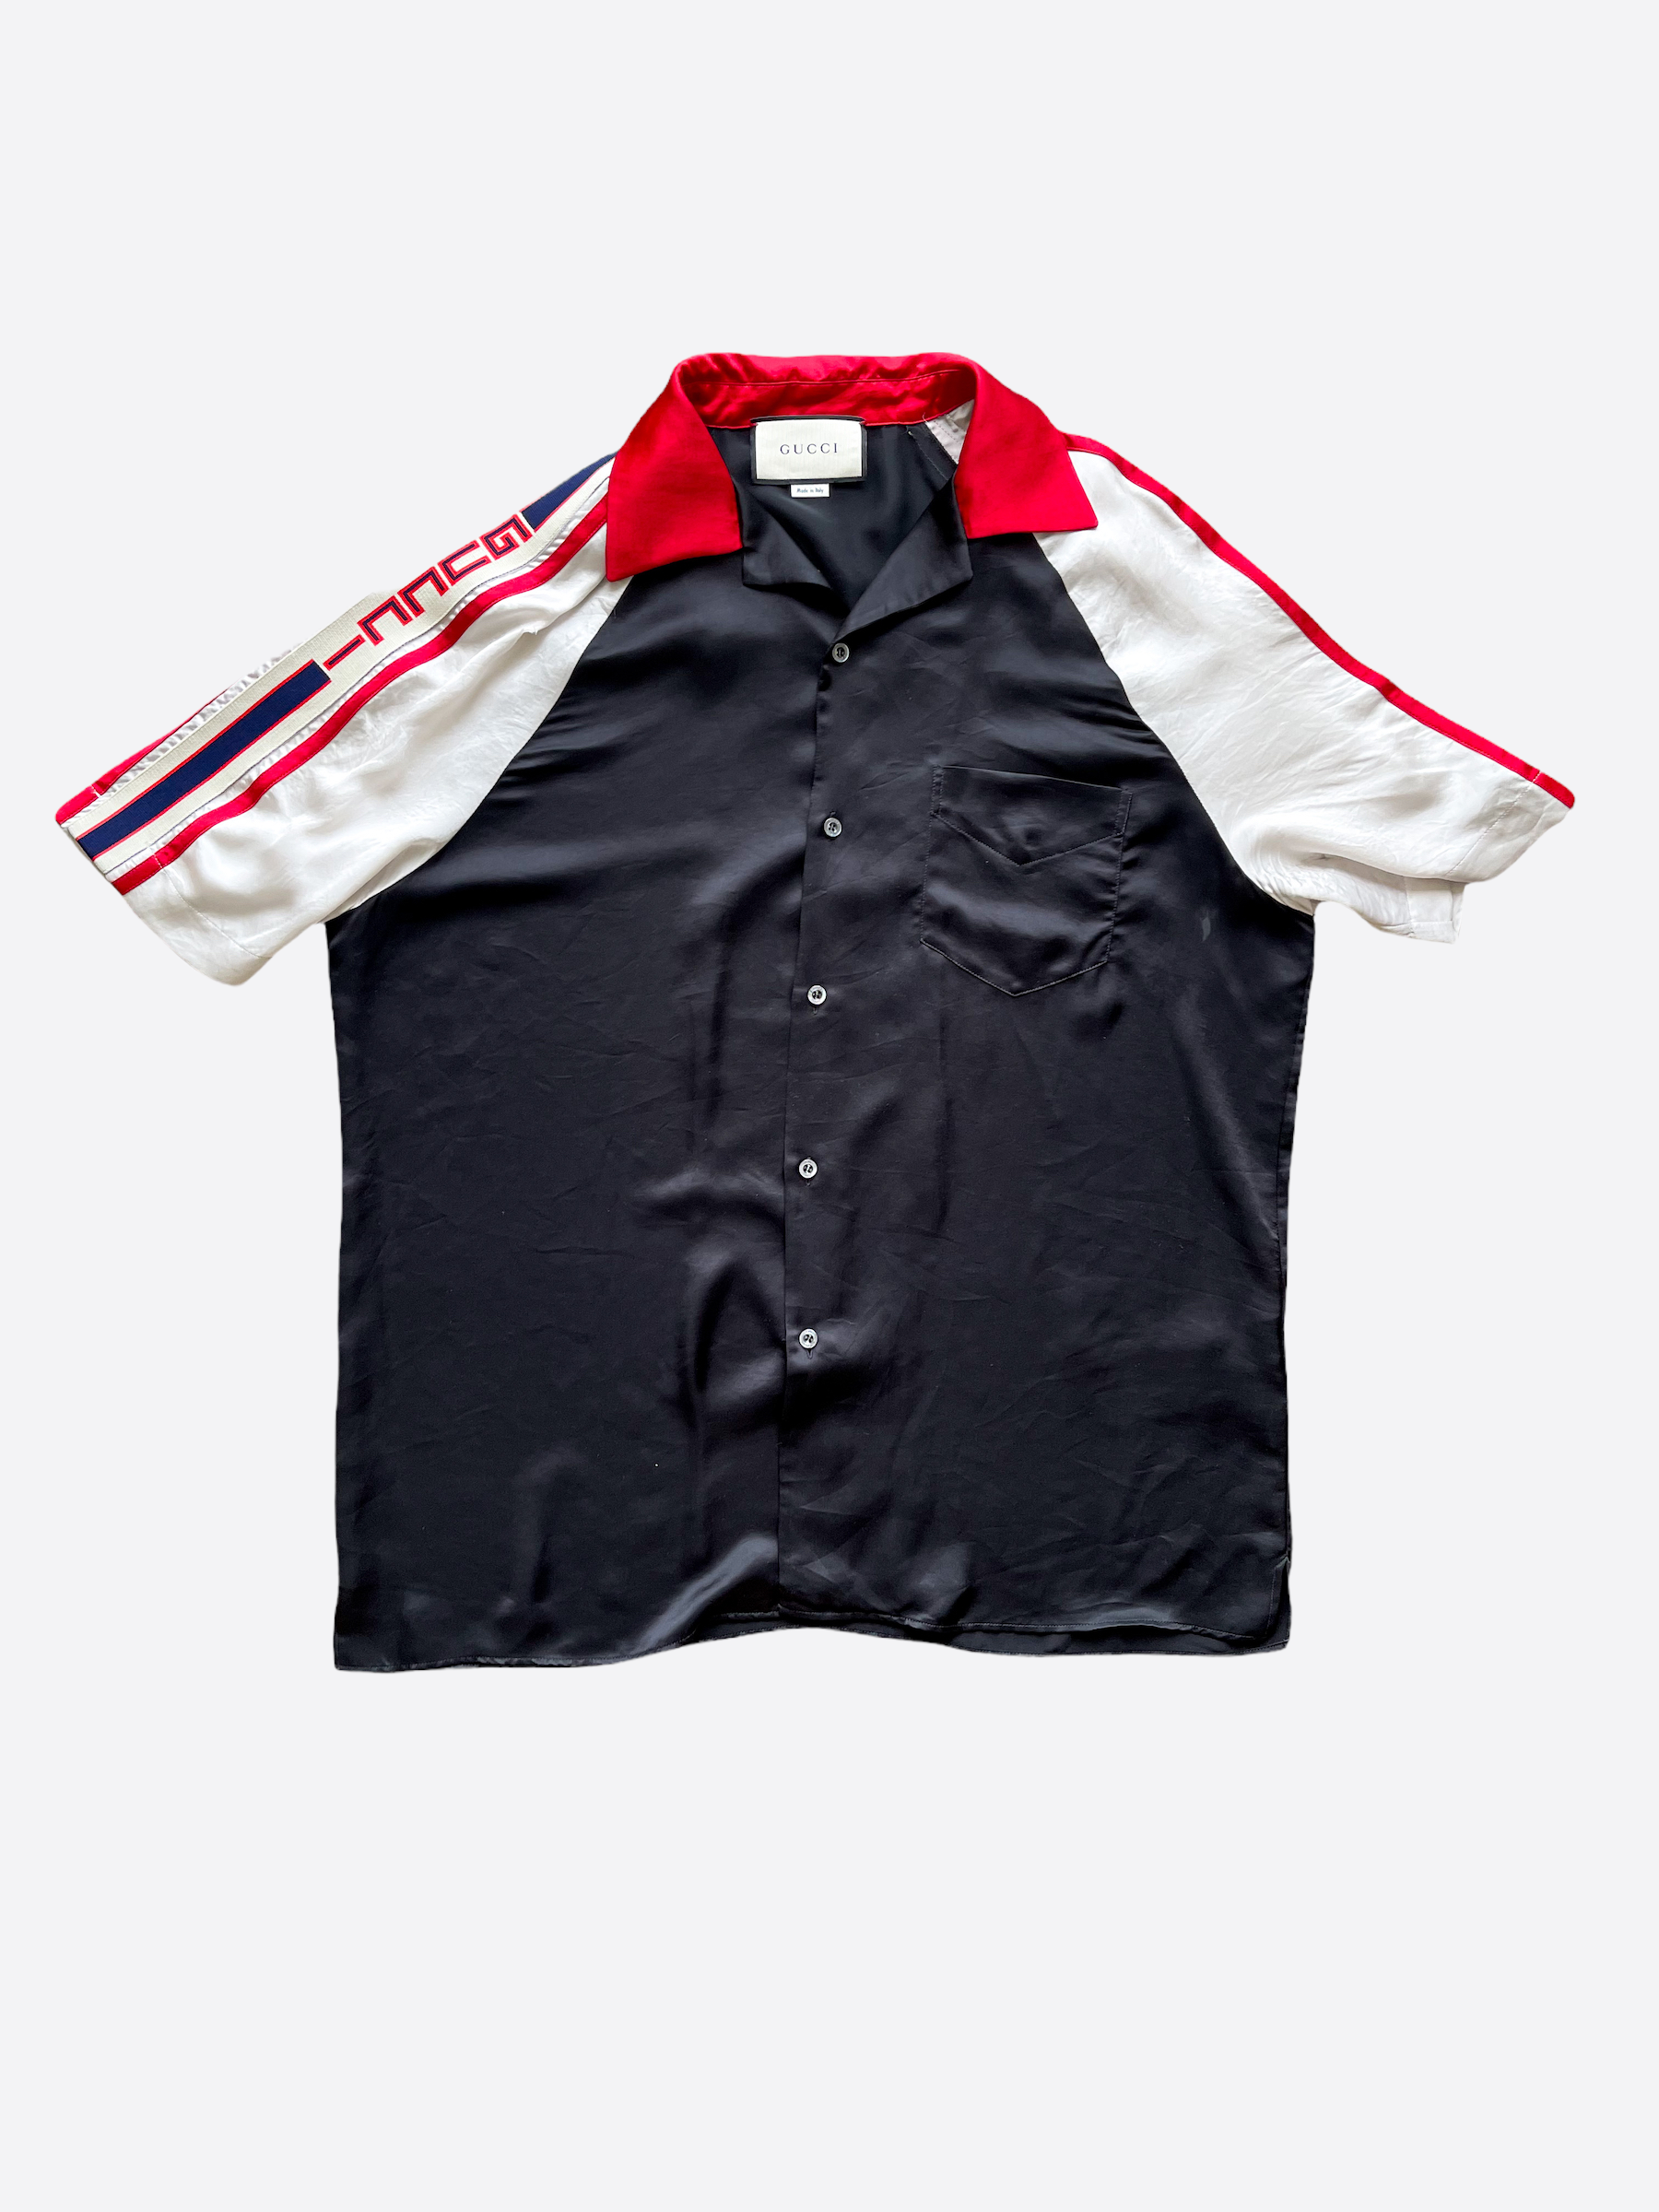 Gucci Black & Red Acetate Bowling Shirt